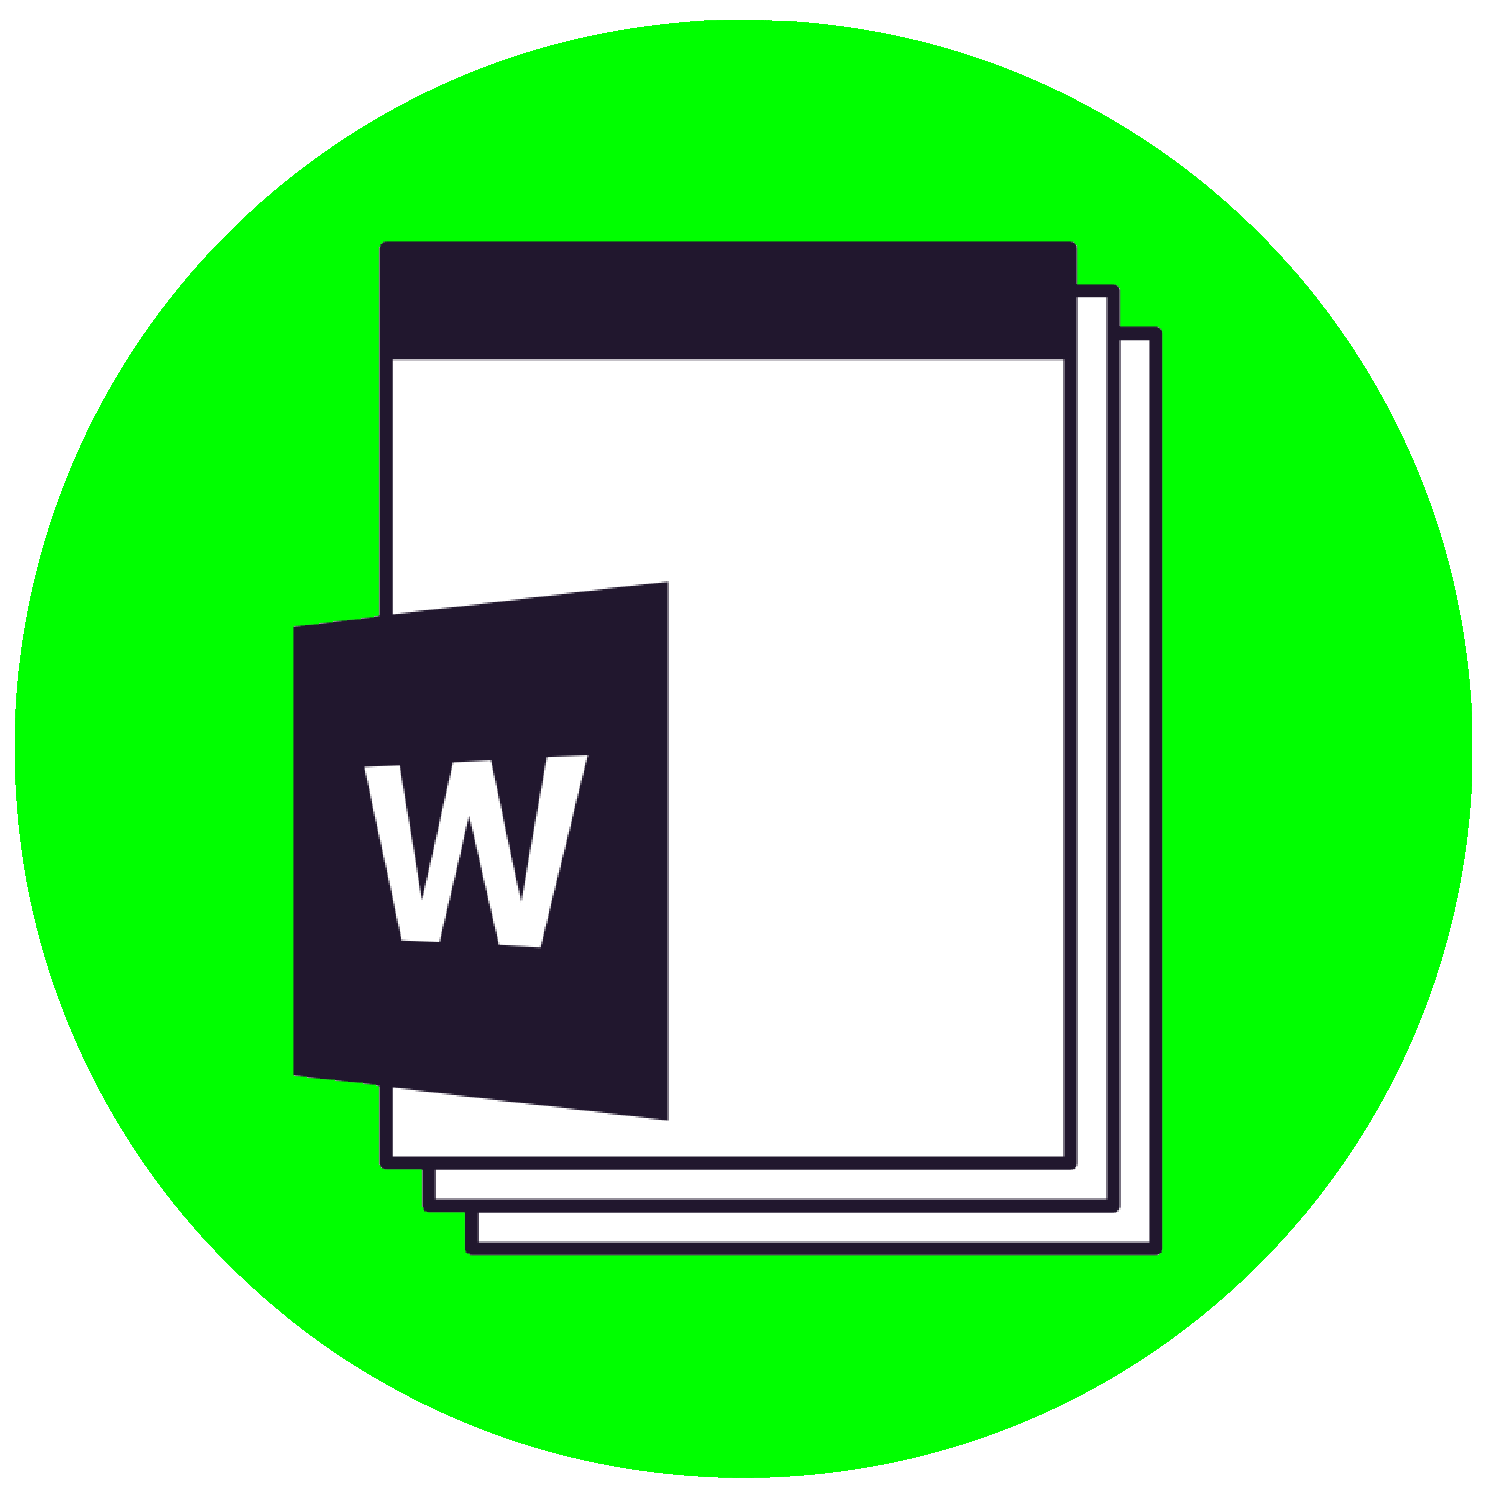 A decorative image of a Microsoft Word file